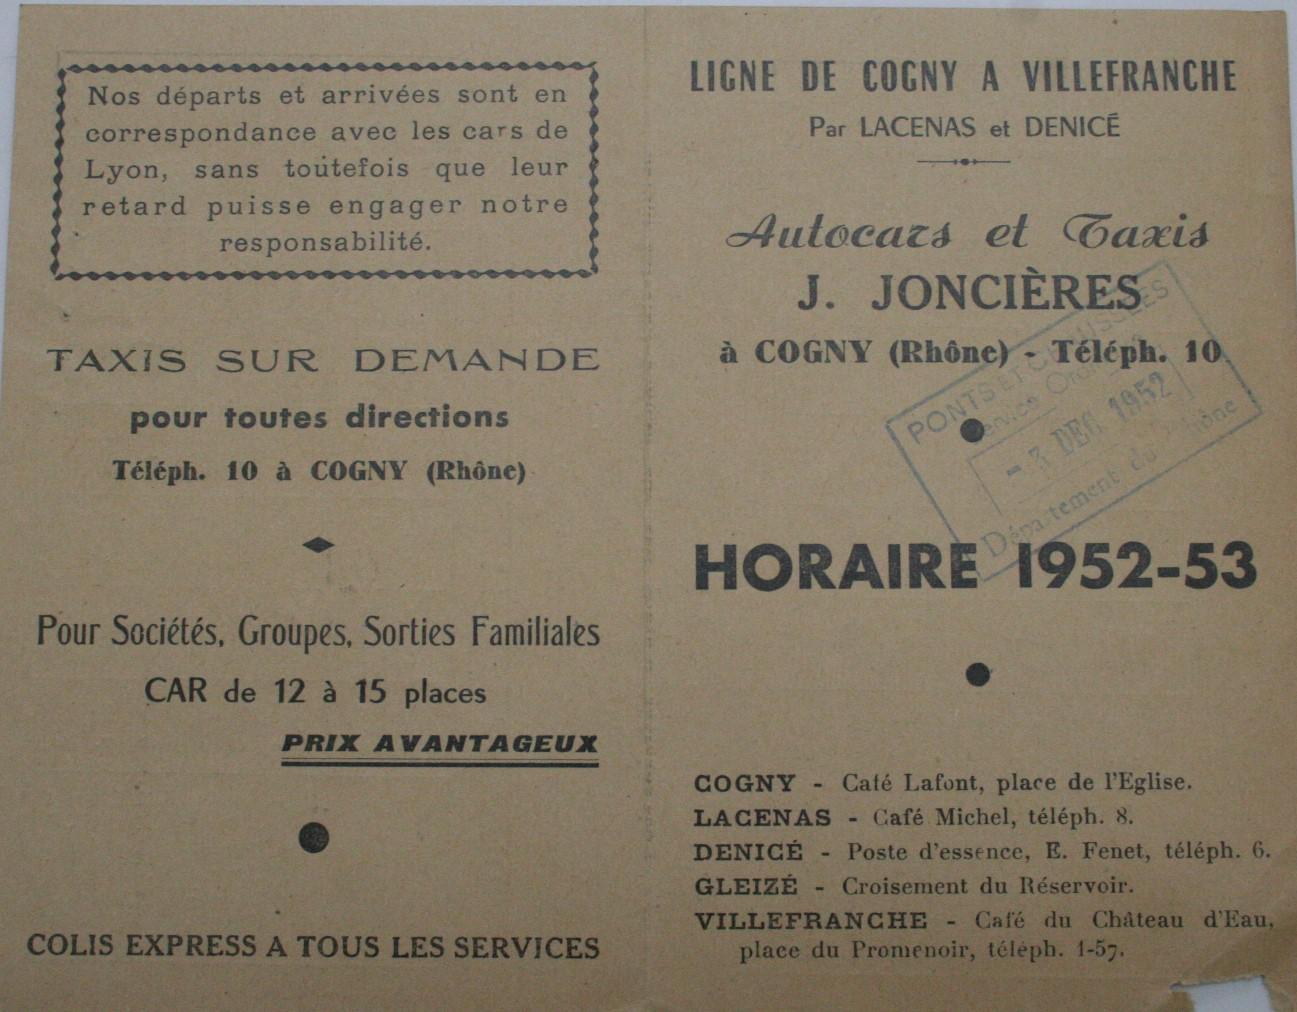 Joncires timetable 1952 - 1953